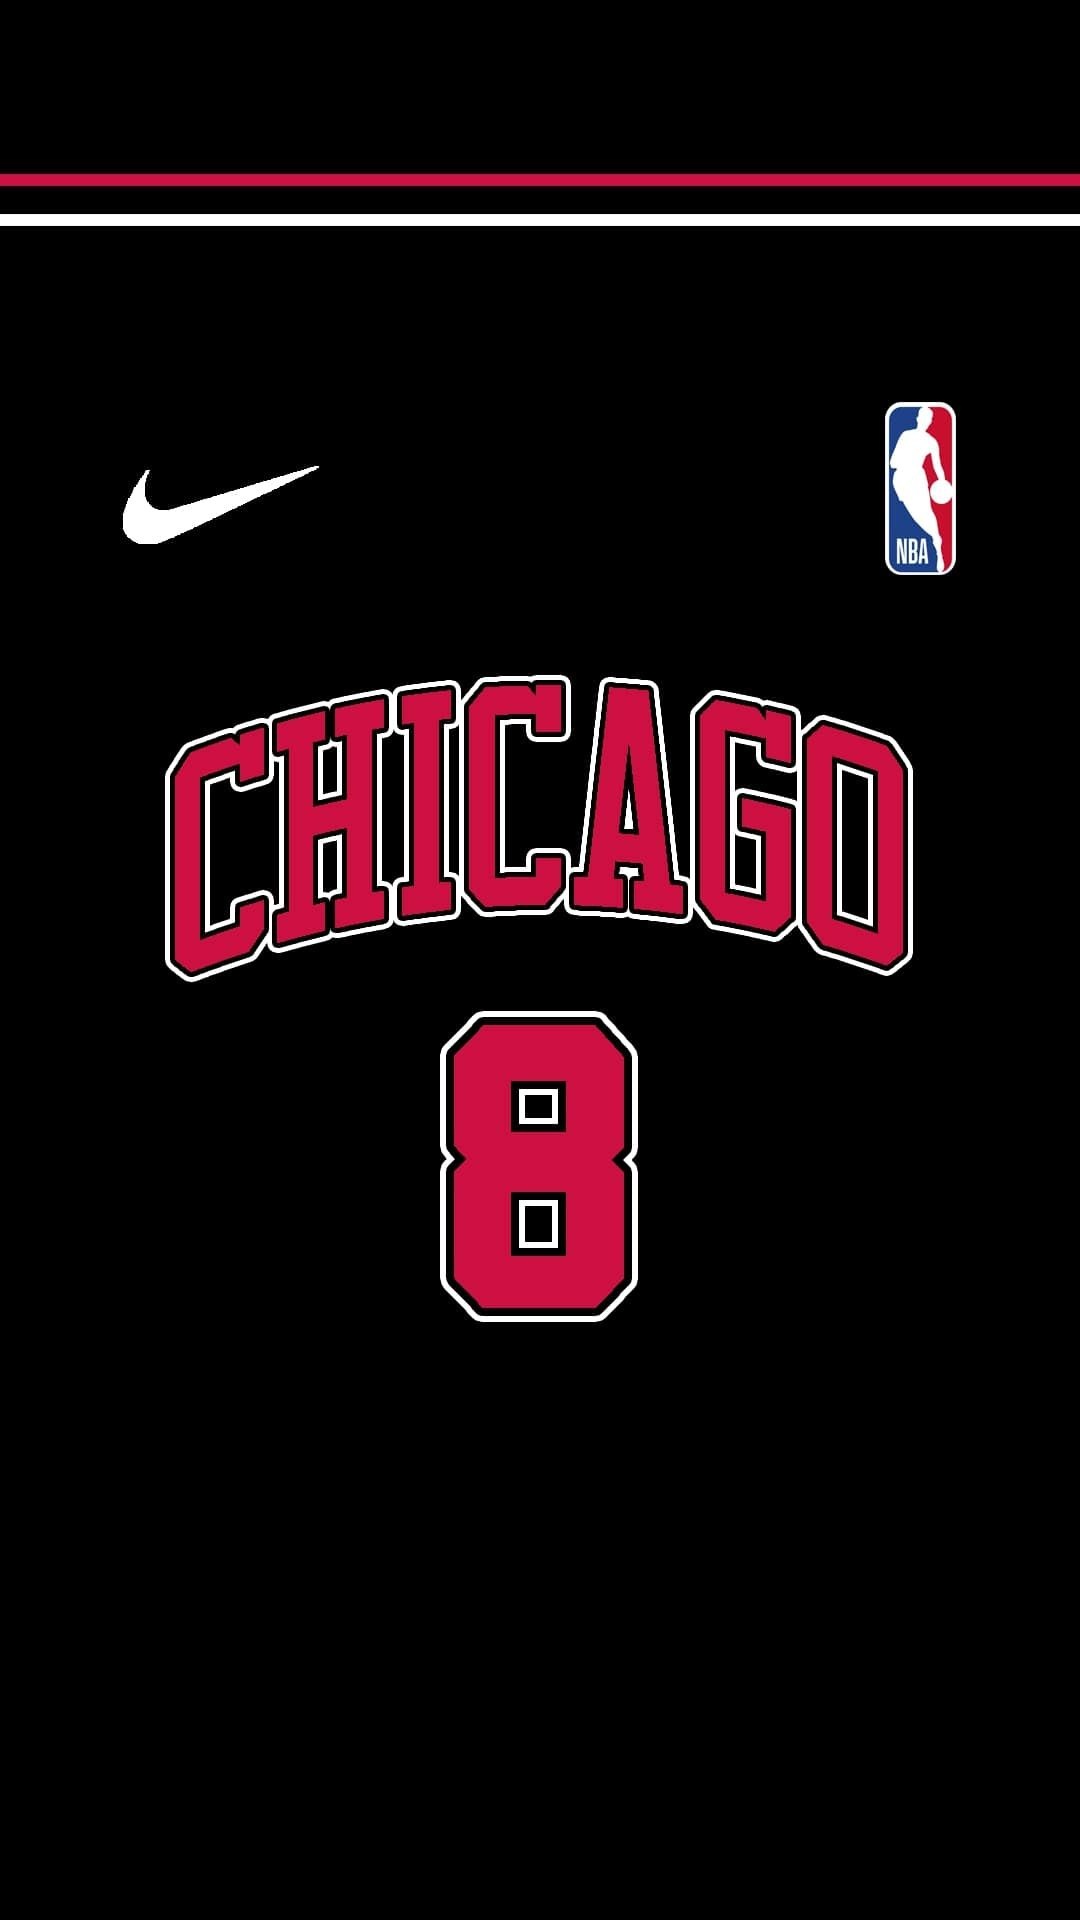 Chicago Bulls: The team's mascot is named "Benny the Bull", NBA basketball. 1080x1920 Full HD Wallpaper.